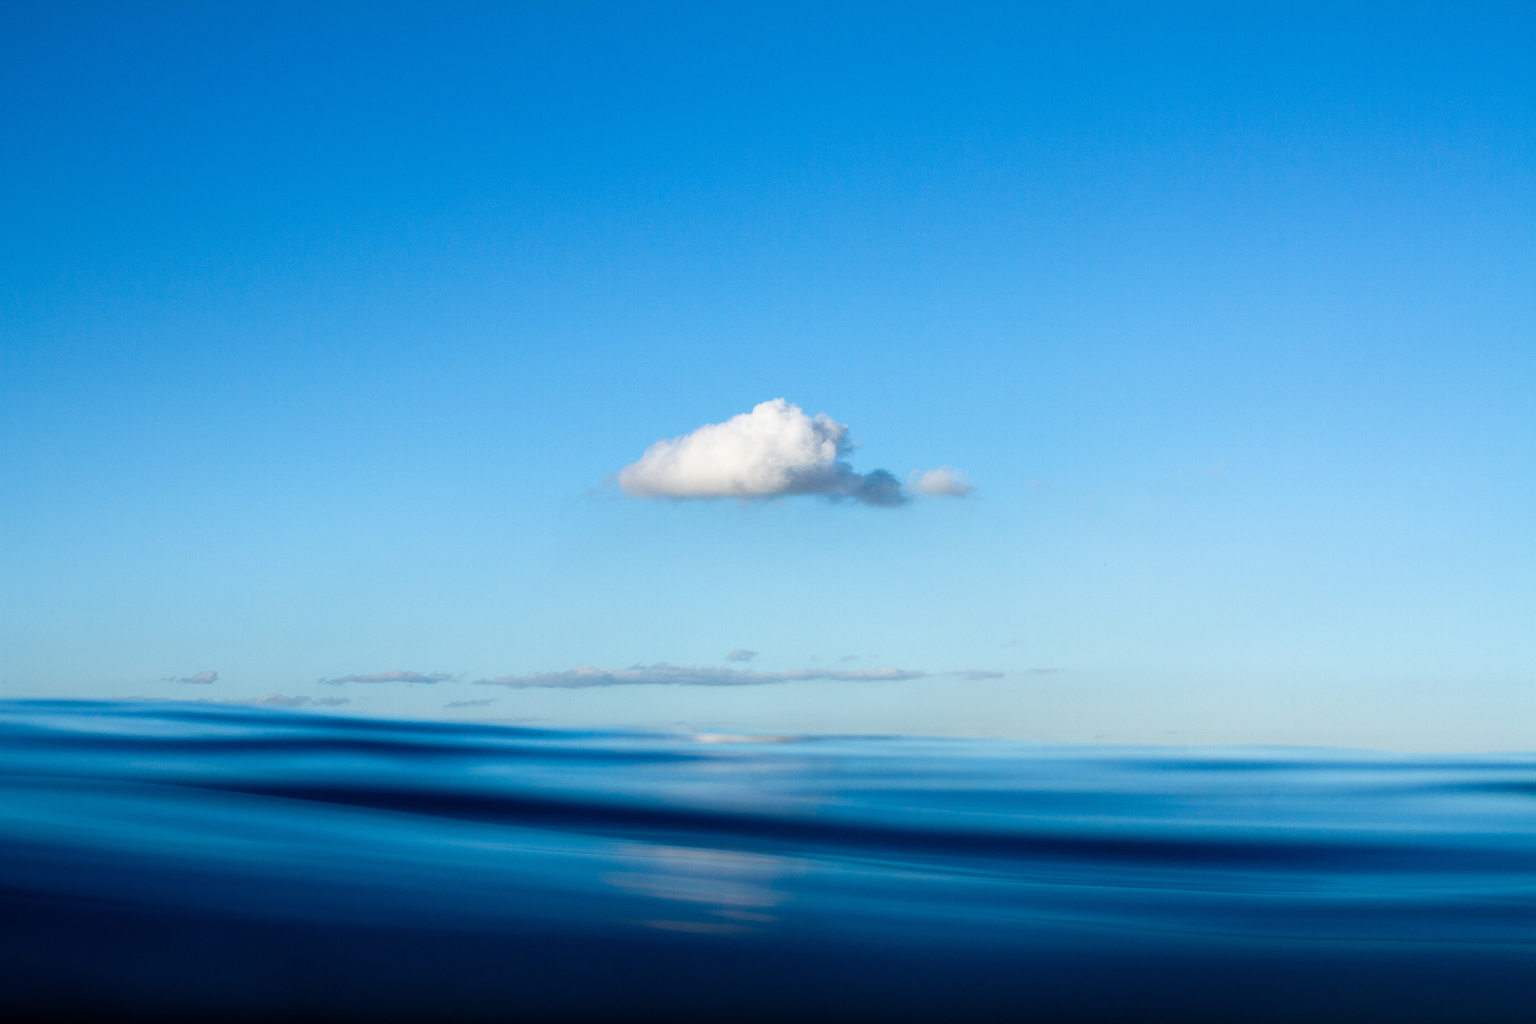 A cloud over the sea